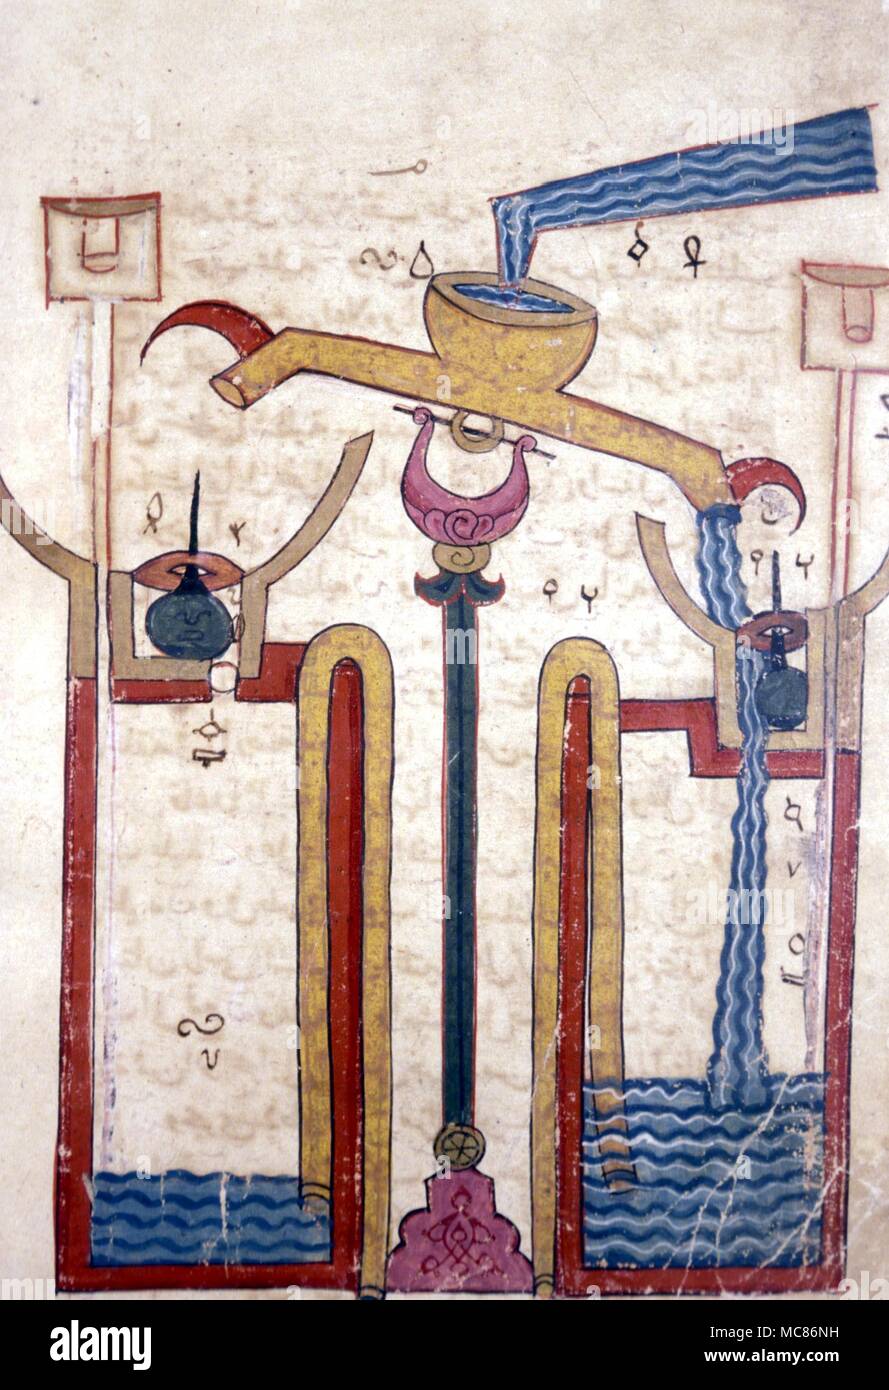 SCIENTIFIC CURIOSITIES Mechanical flute. A perpetual flute with two floats. From 'Kitab fi Ma' rifat al-hiyal al-hardasiya' - Egypt, 14th century. From the Dar al-Athar al-Islammiyya, Kuwait Stock Photo